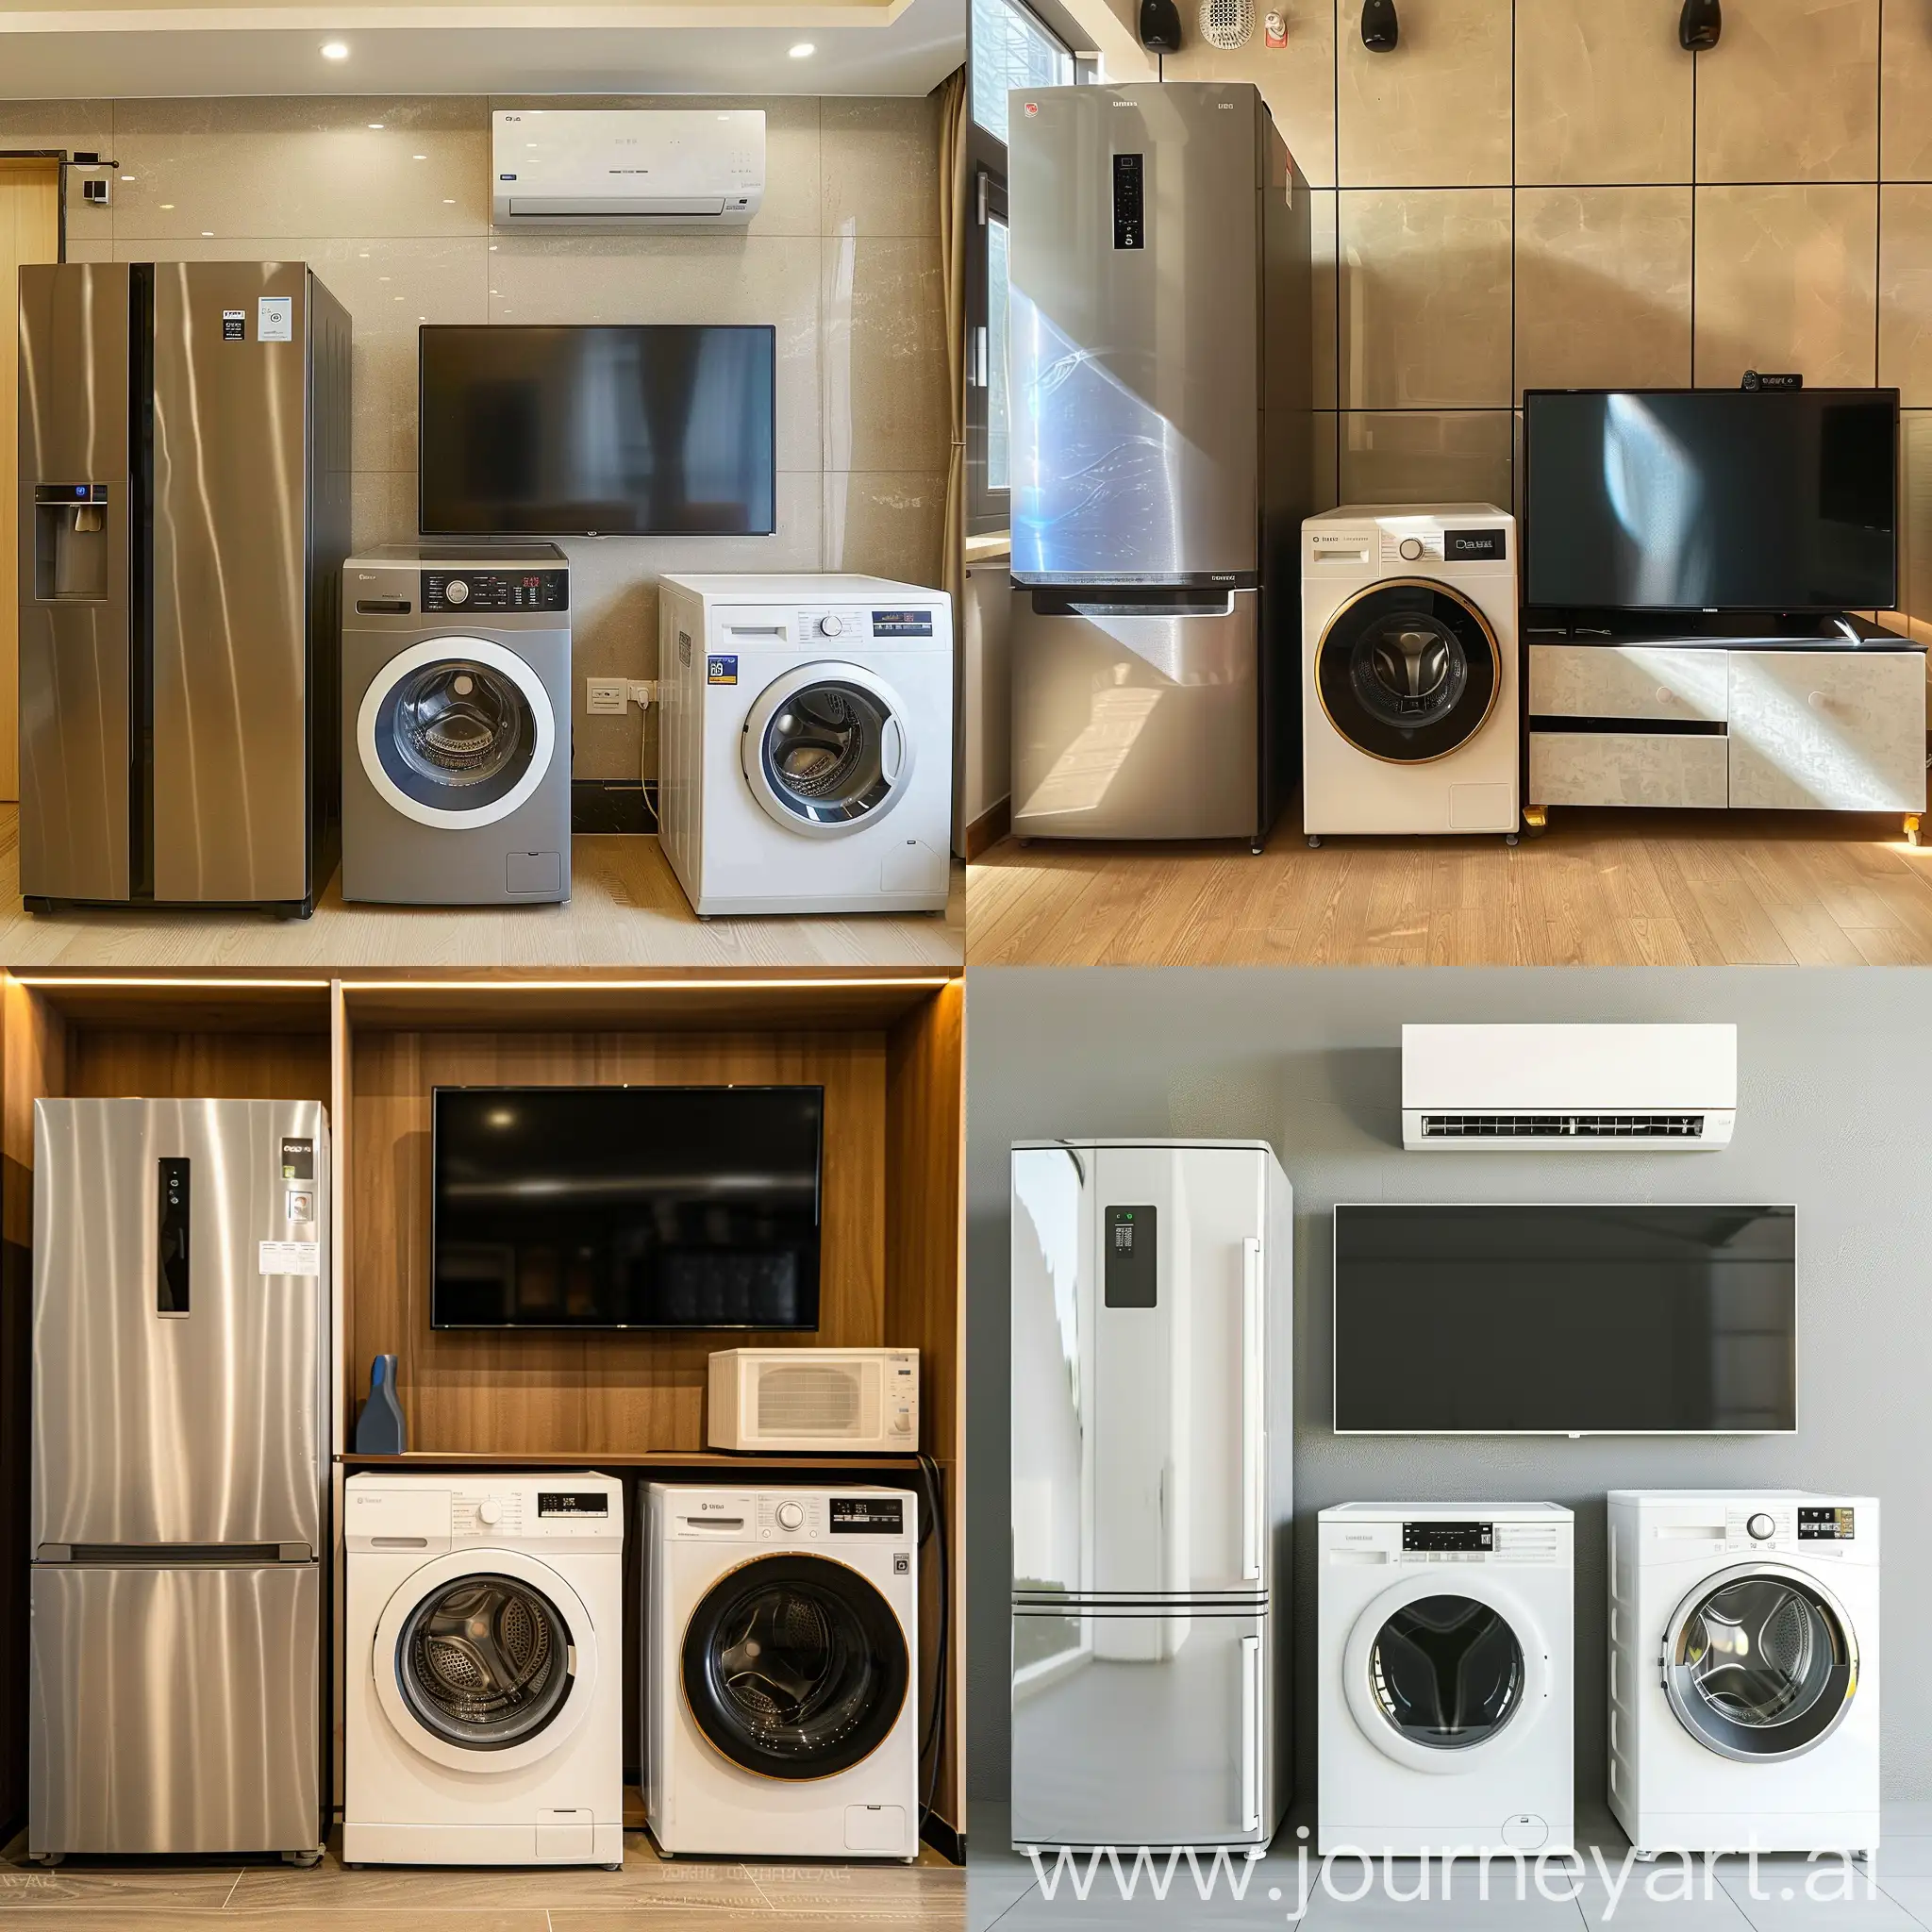 A combo of fridge, AC, TV, Washing machine